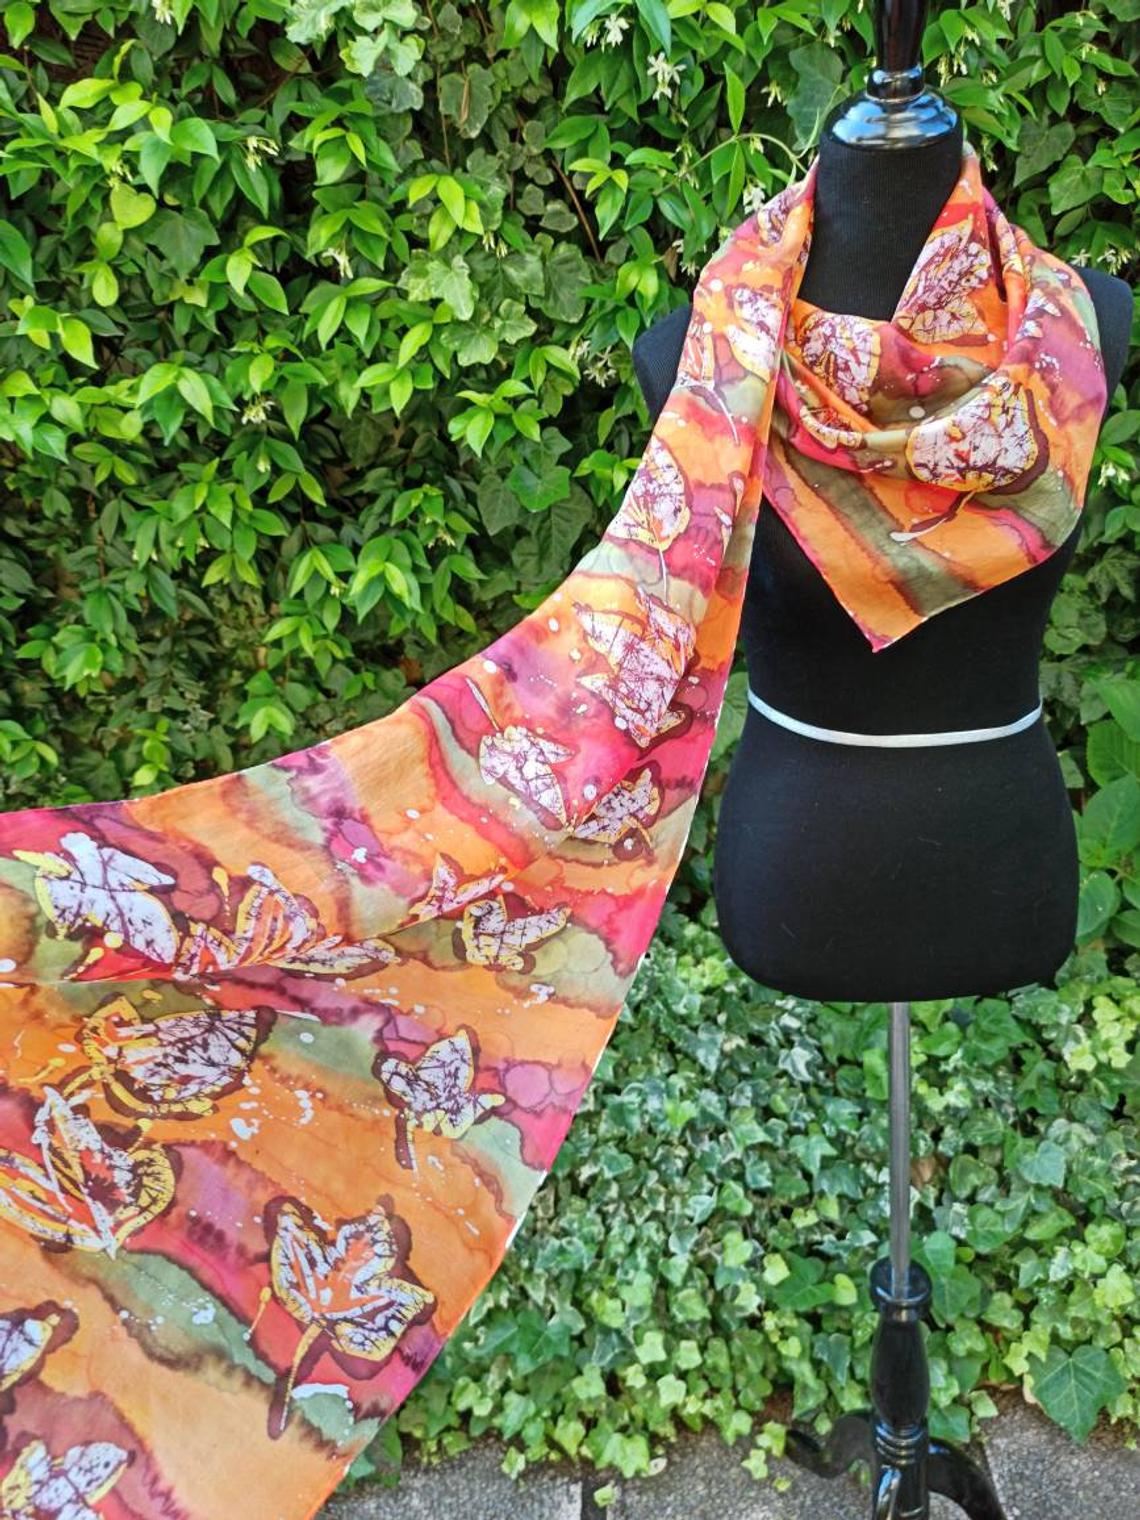 Desert flowers hand painted batik 100% silk scarf. Floral design